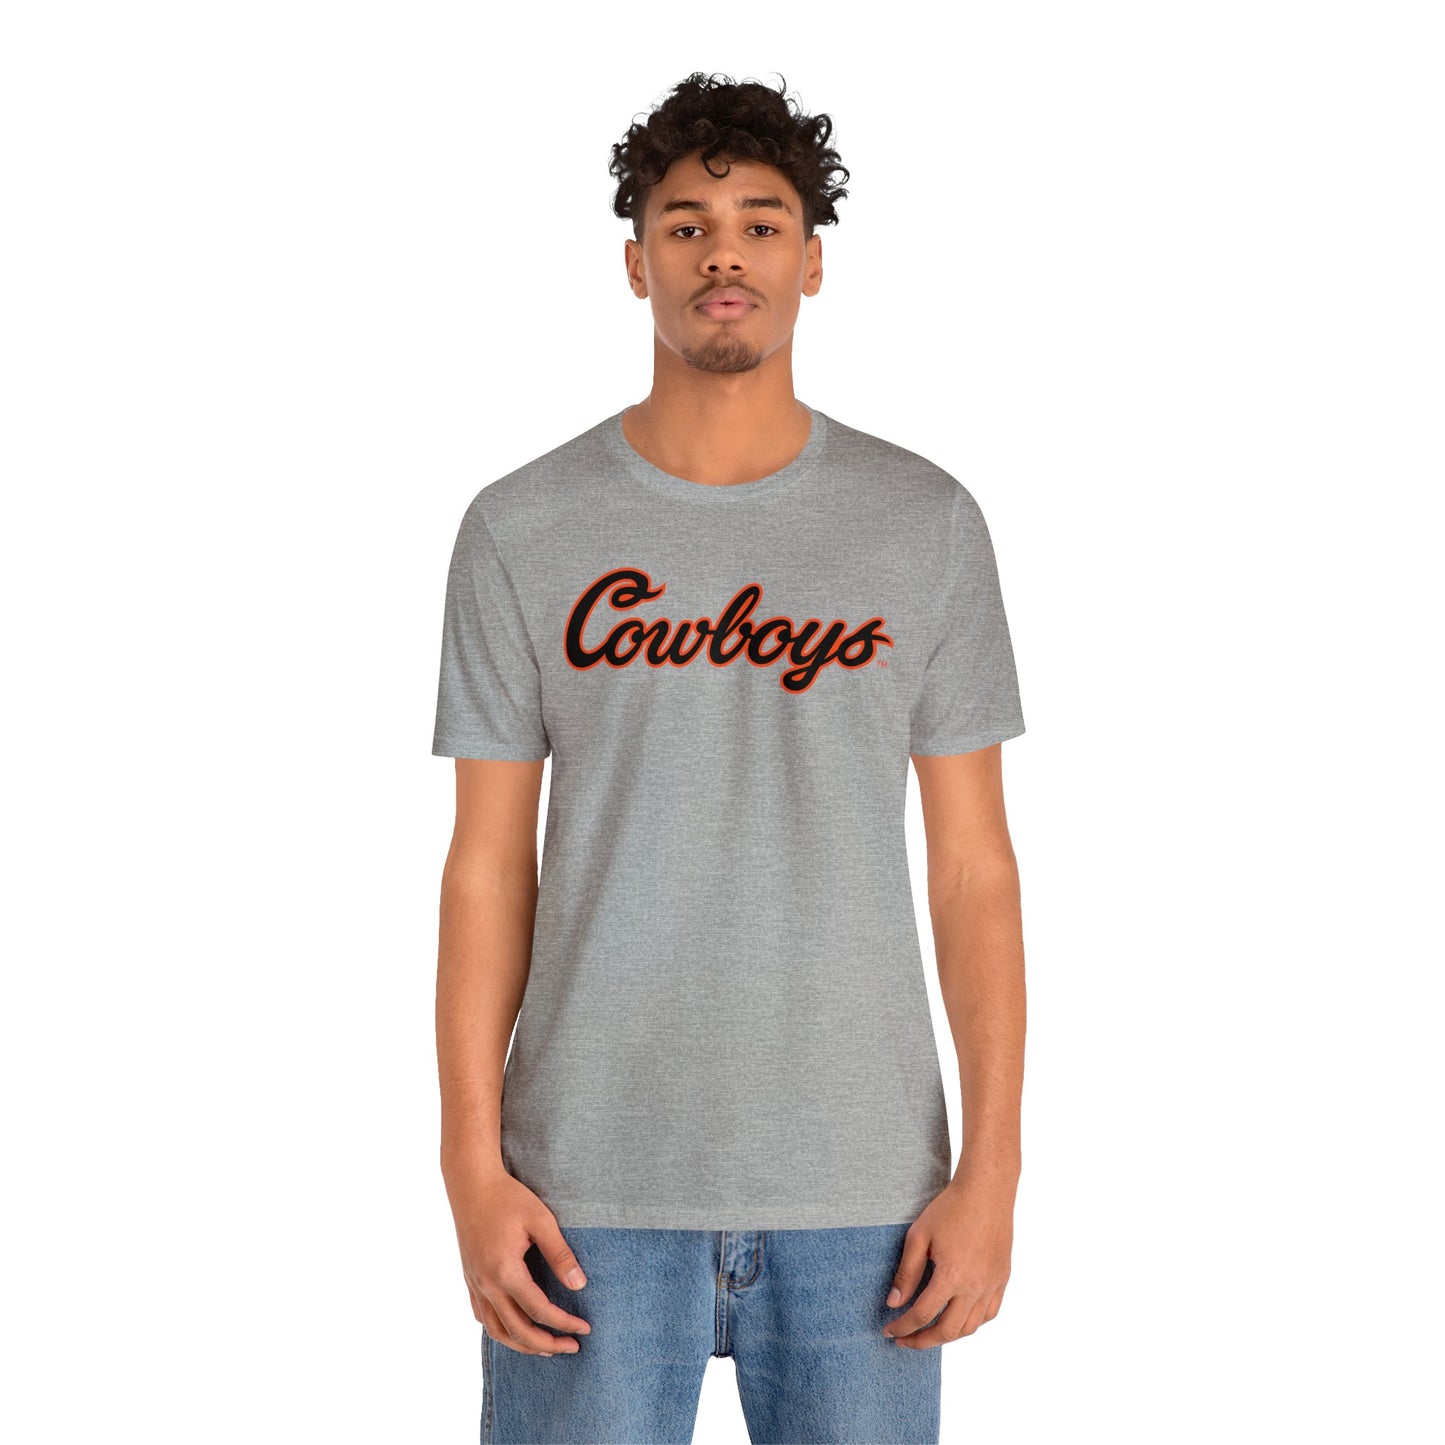 Cale Cabbiness #83 Cursive Cowboys T-Shirt